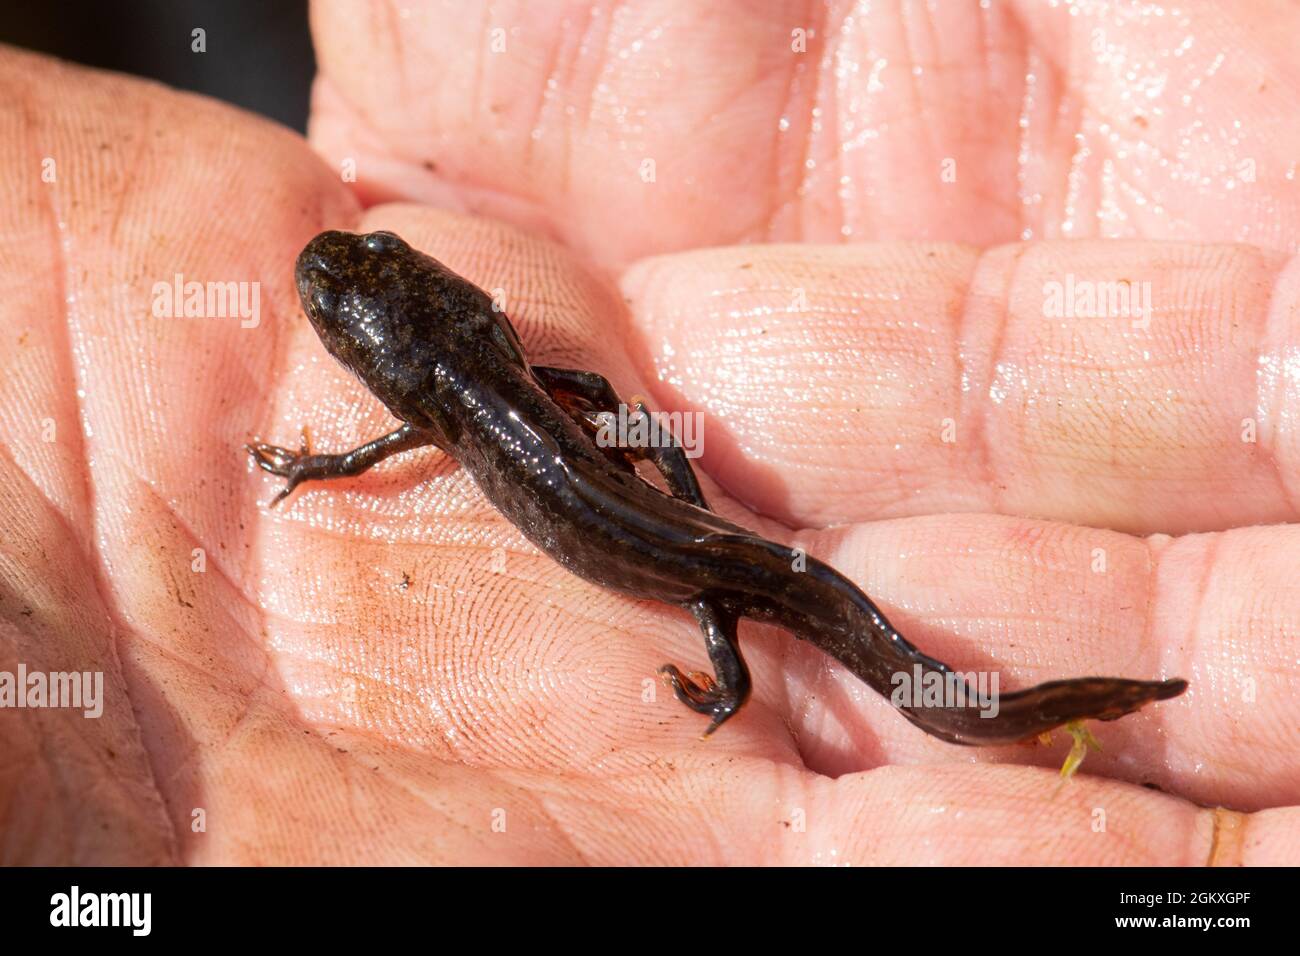 Great crested newt eft (Triturus cristatus) in the hand, UK Stock Photo